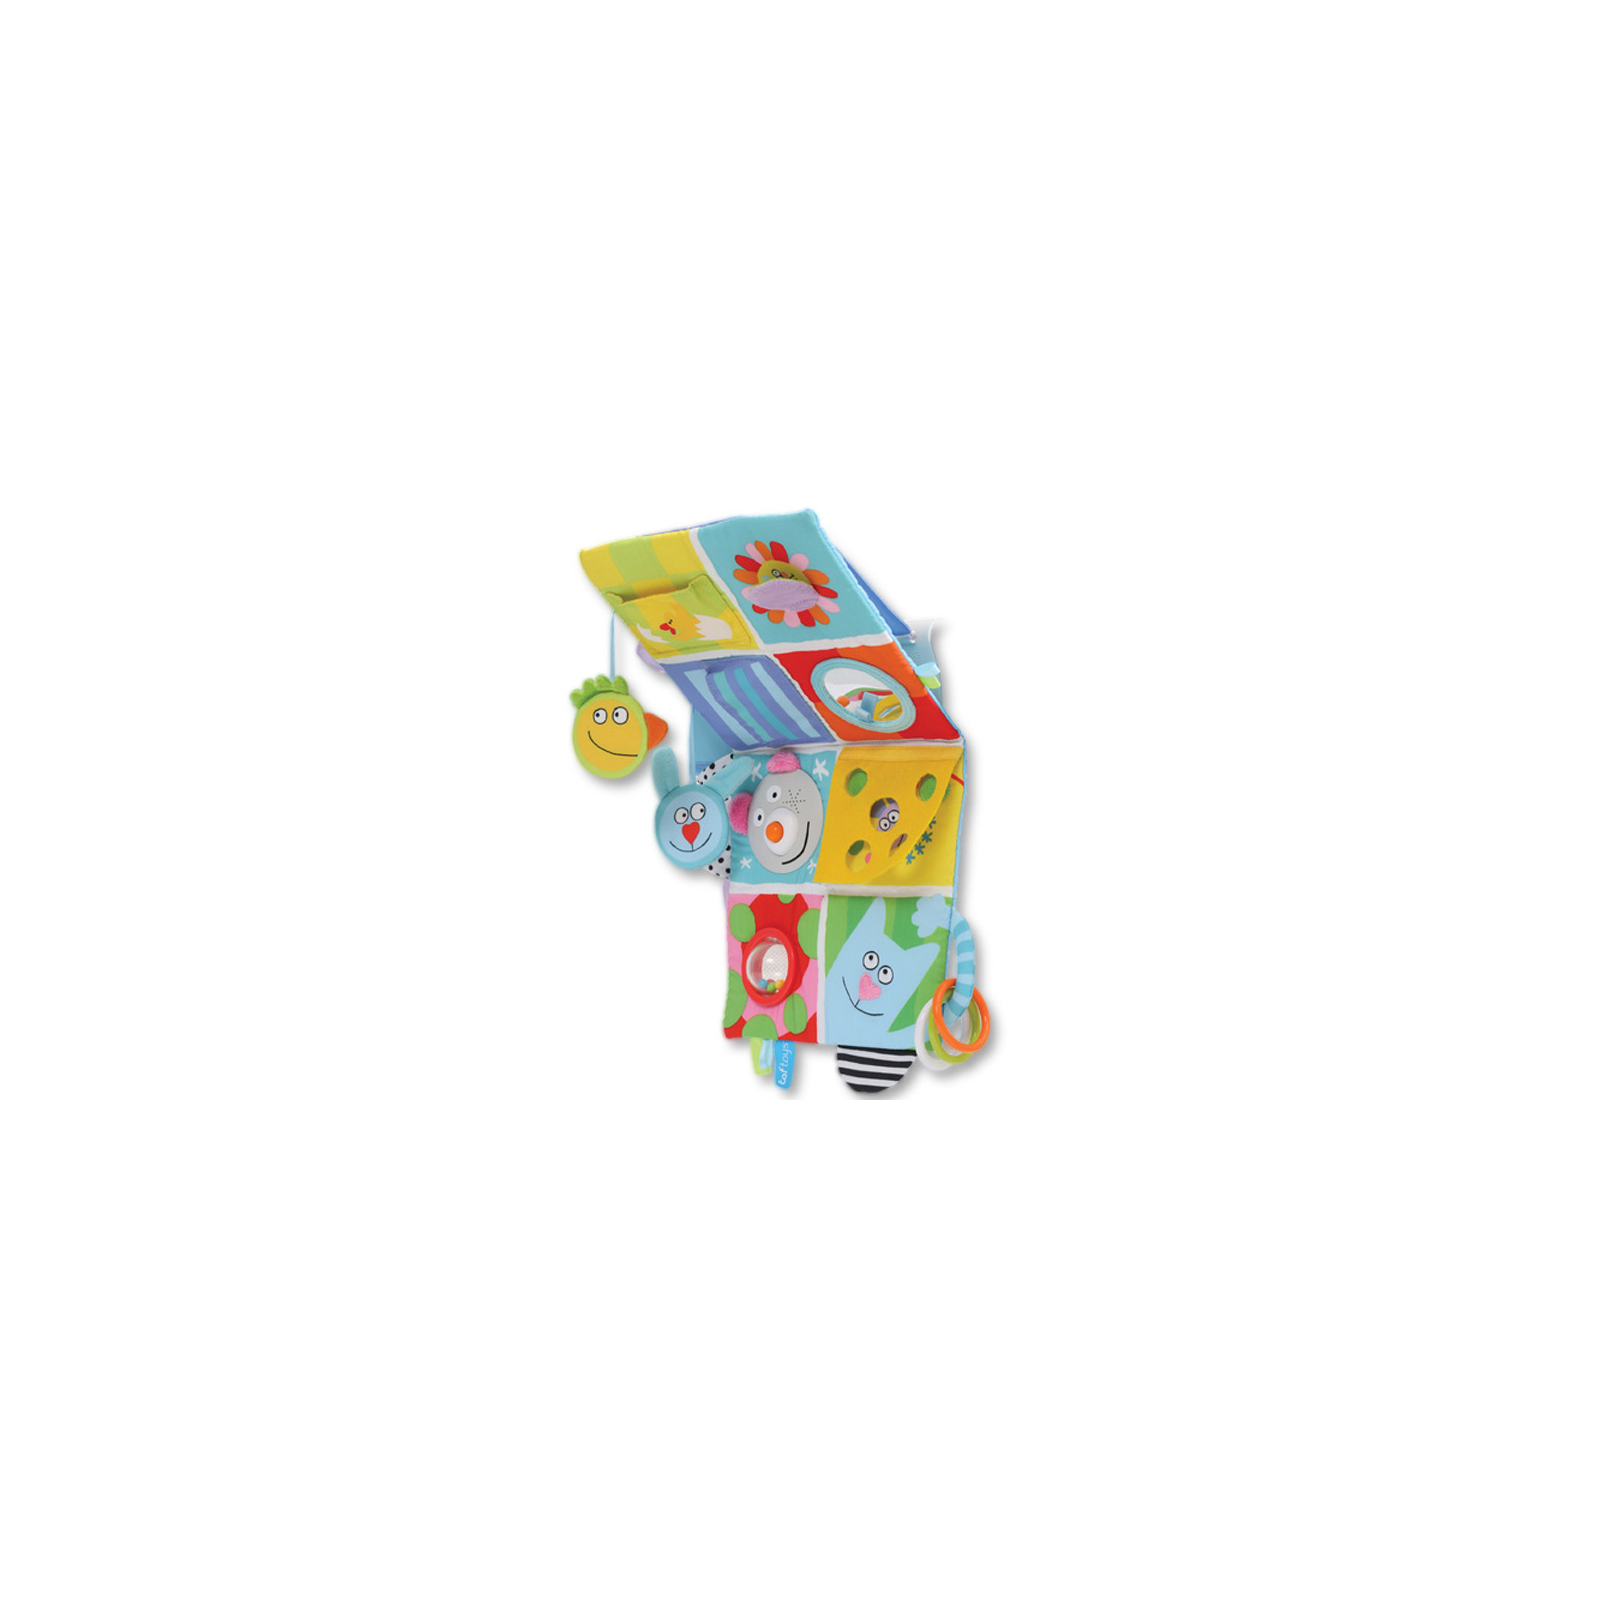 Розвиваюча іграшка Taf Toys Веселые друзья (звук, свет), для кроватки (11655) зображення 2